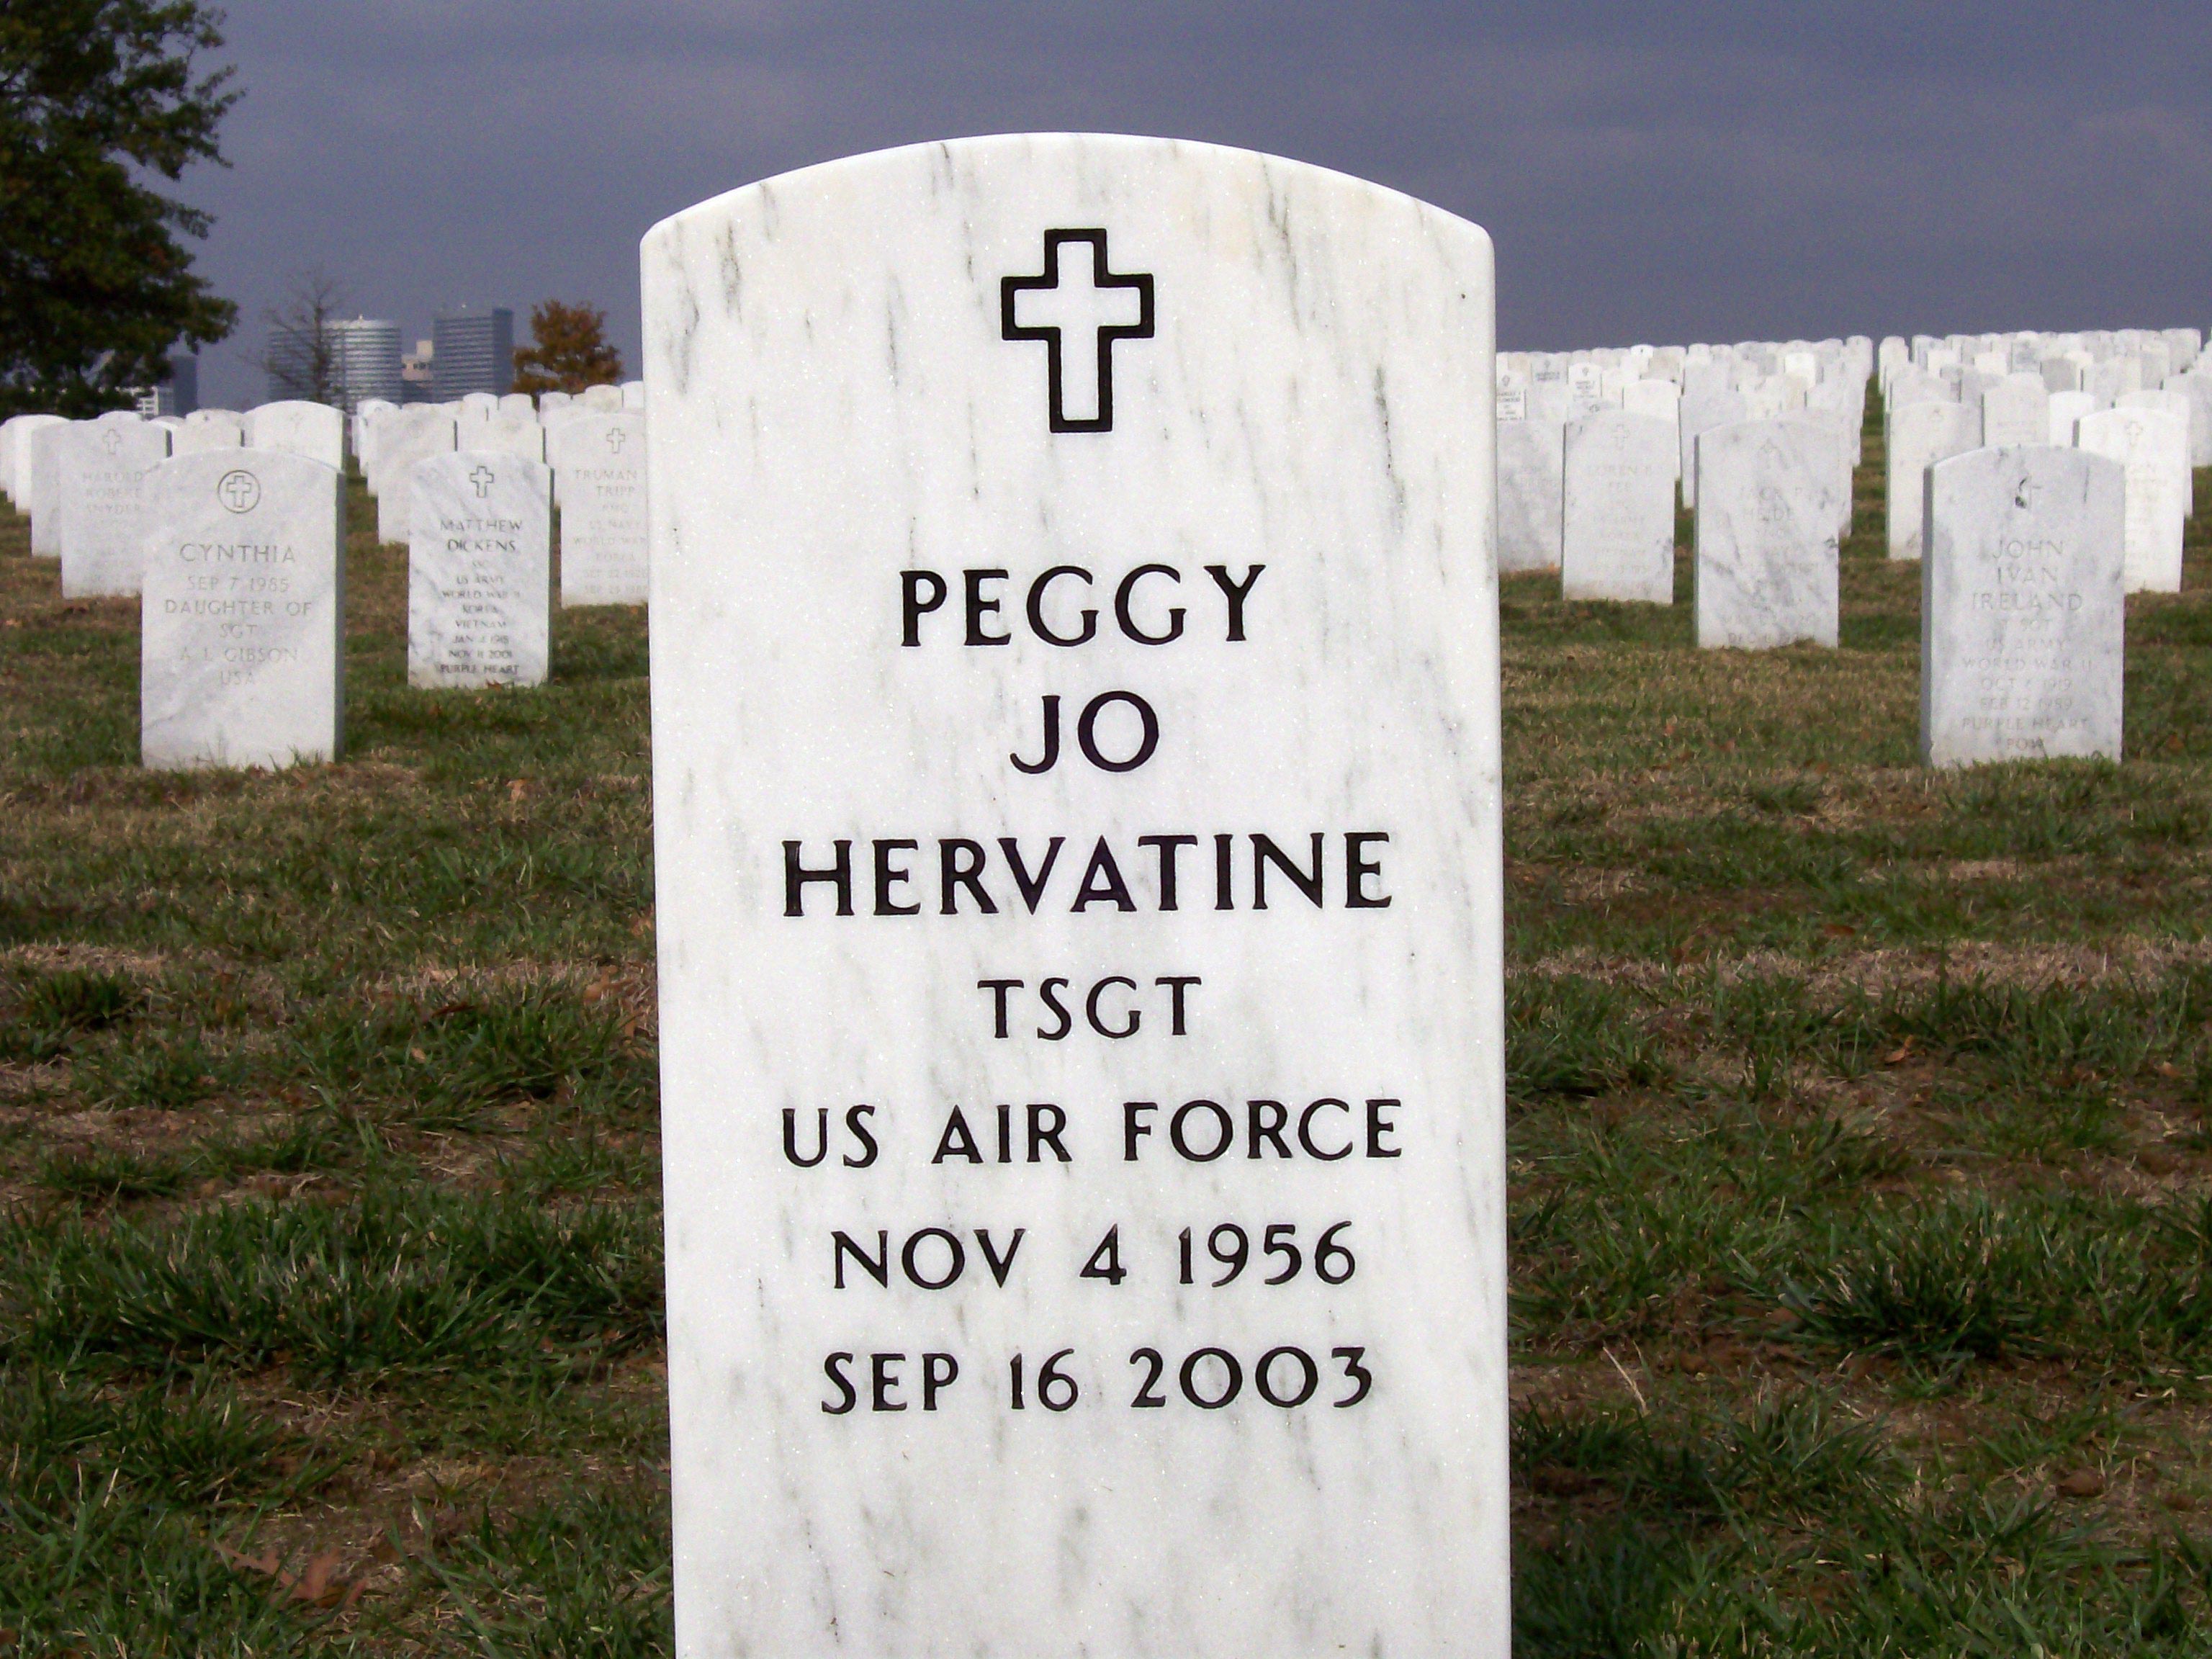 Peggy Hervatine